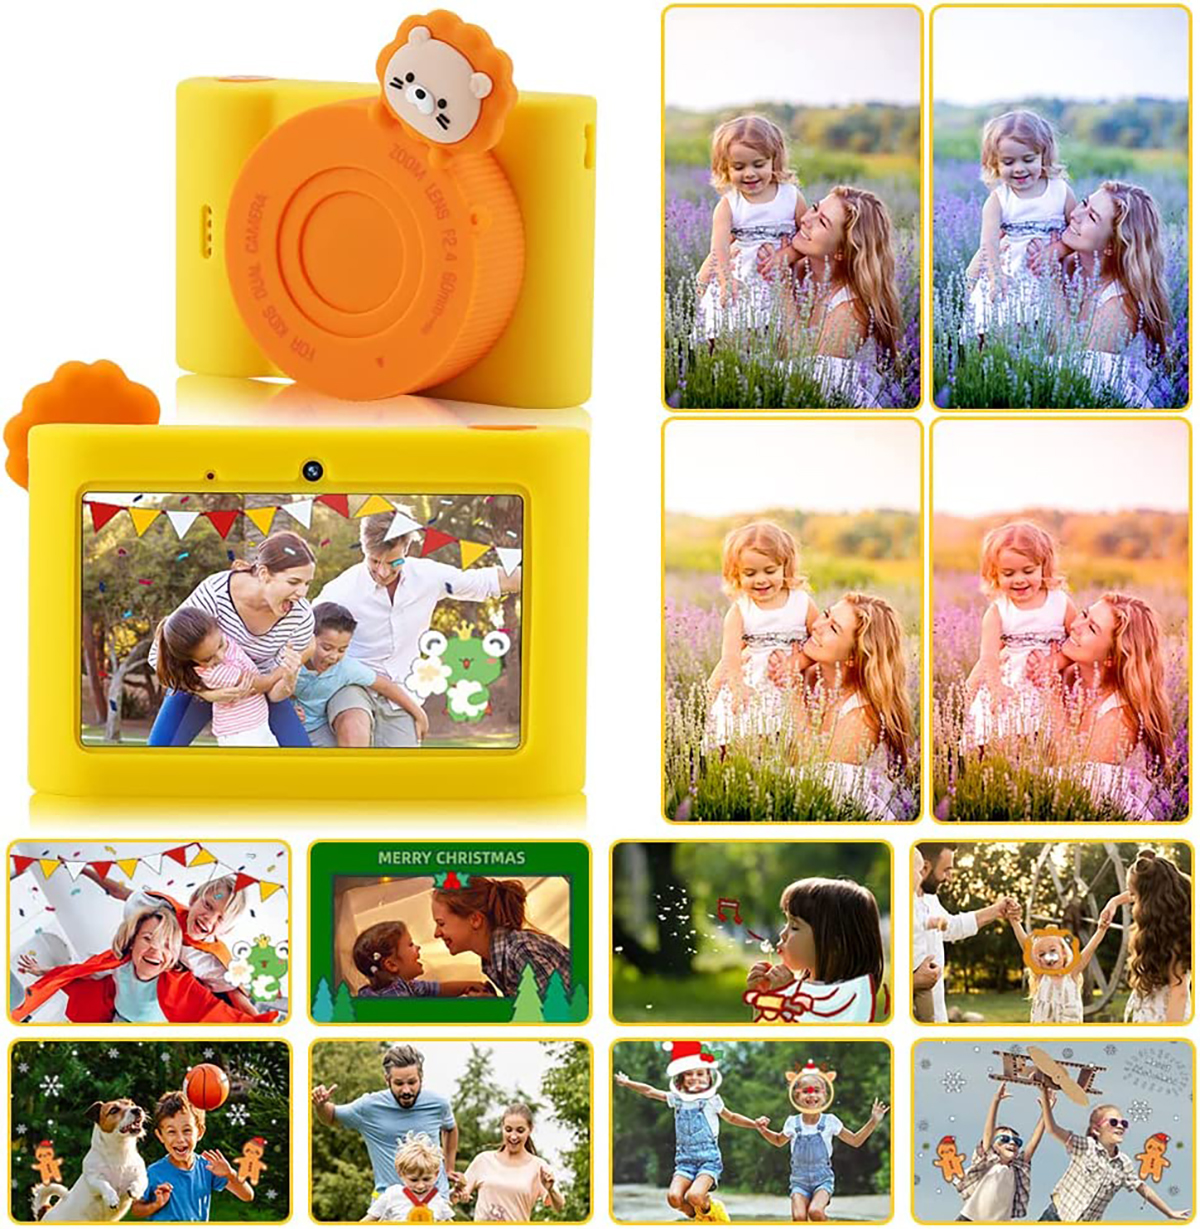 Kinderkamera,48MP,1080P,WiFi LINGDA Fotokamera,32GB Gelb- SD-Karte Kinderkamera DigitalKamera